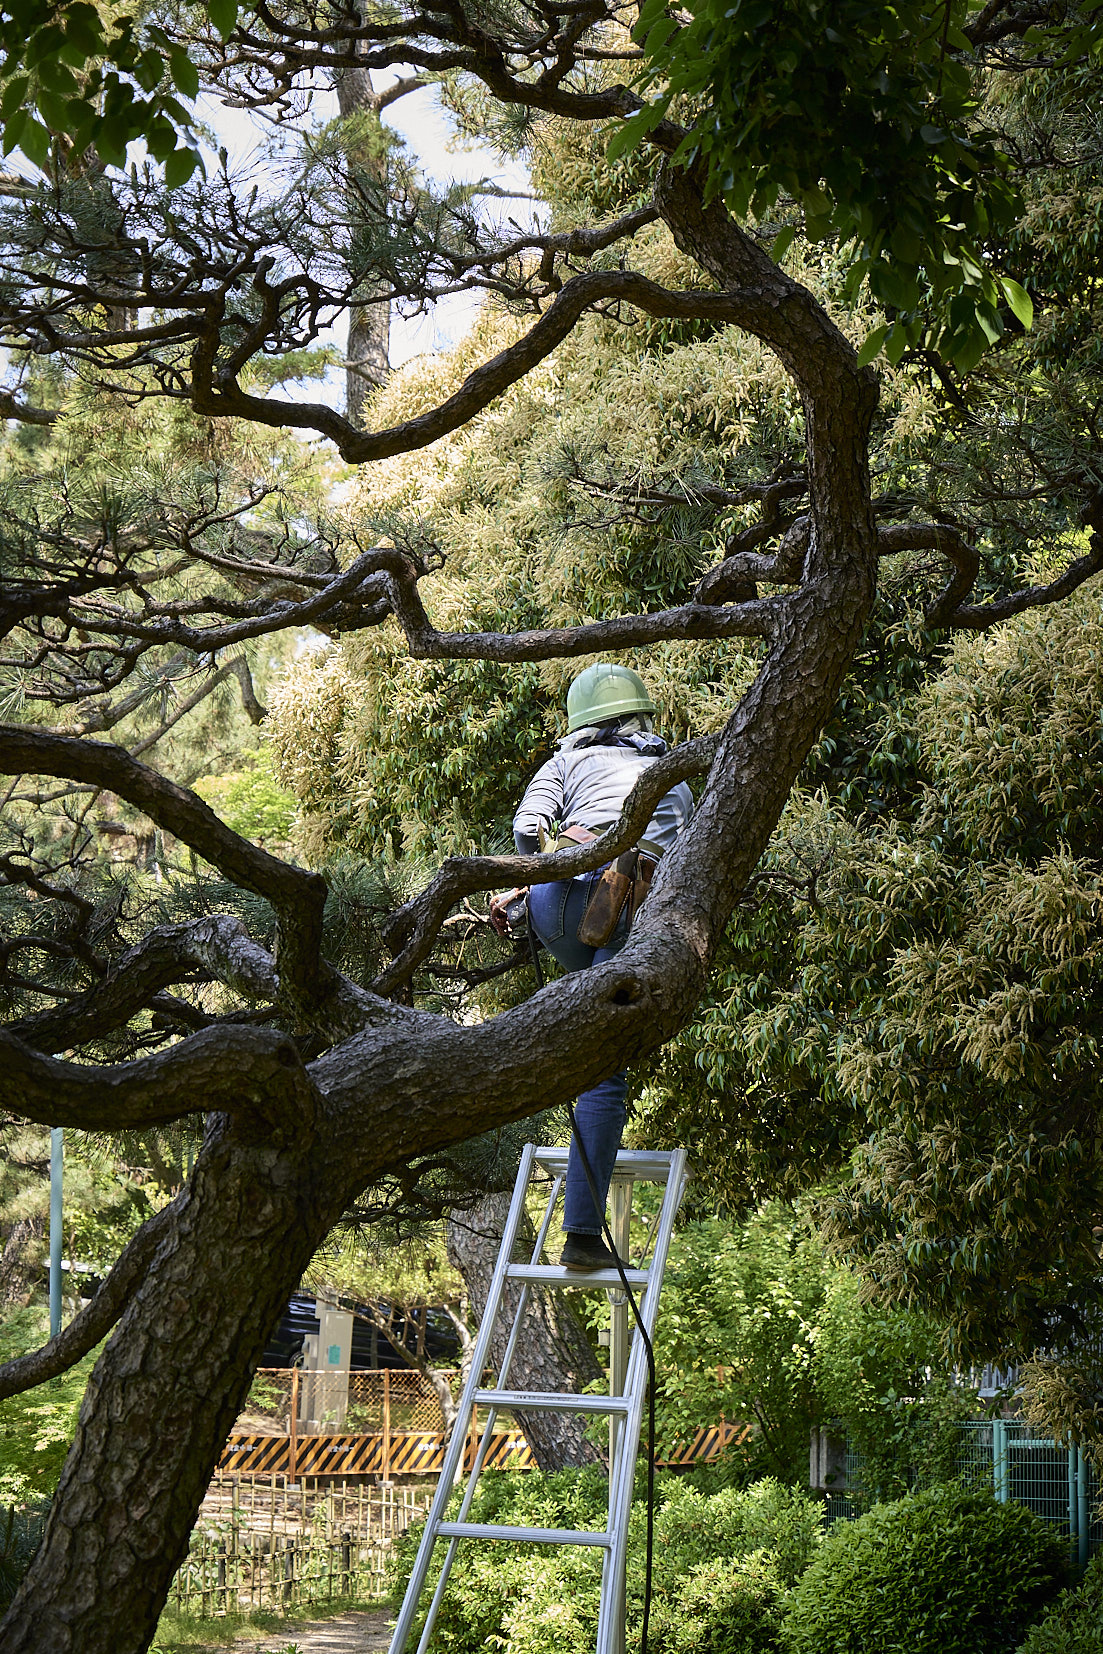 Gardeners pruning tree branches in Tsurumai Park, Nagoya.